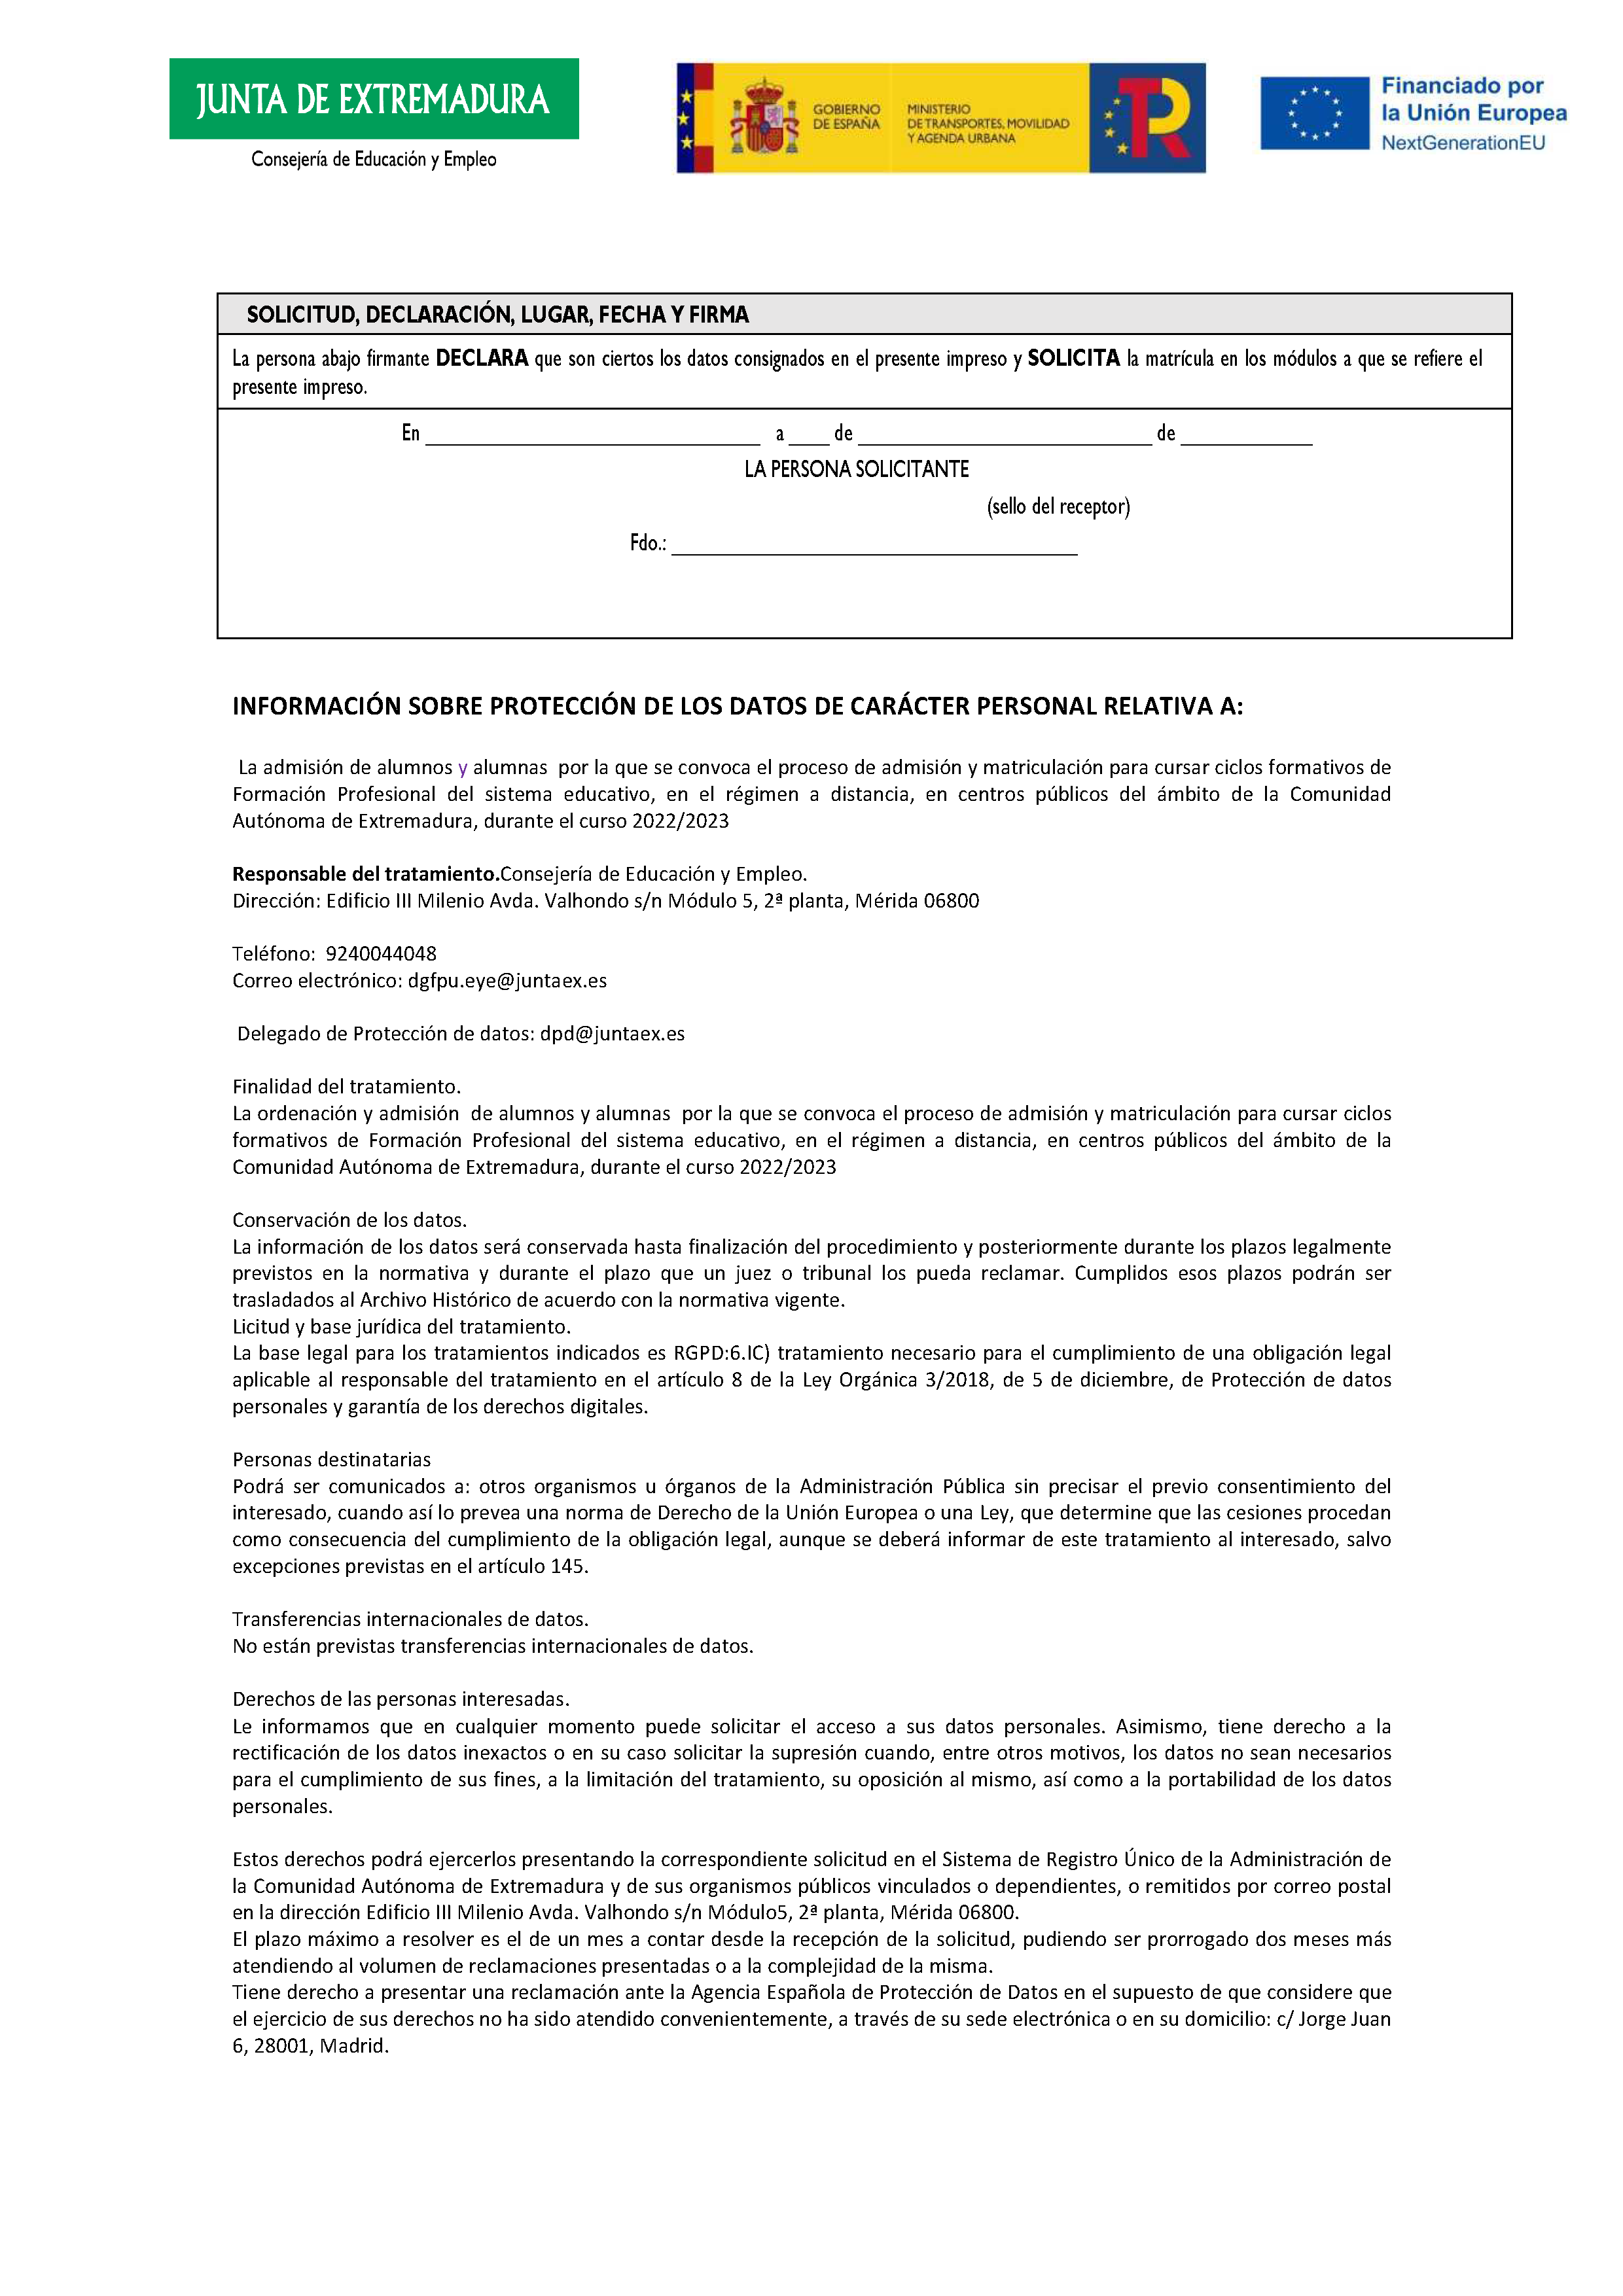 ANEXO FORMACIÃ“N PROFESIONAL DEL SISTEMA EDUCATIVO RÃ‰GIMEN A DISTANCIA Pag 28